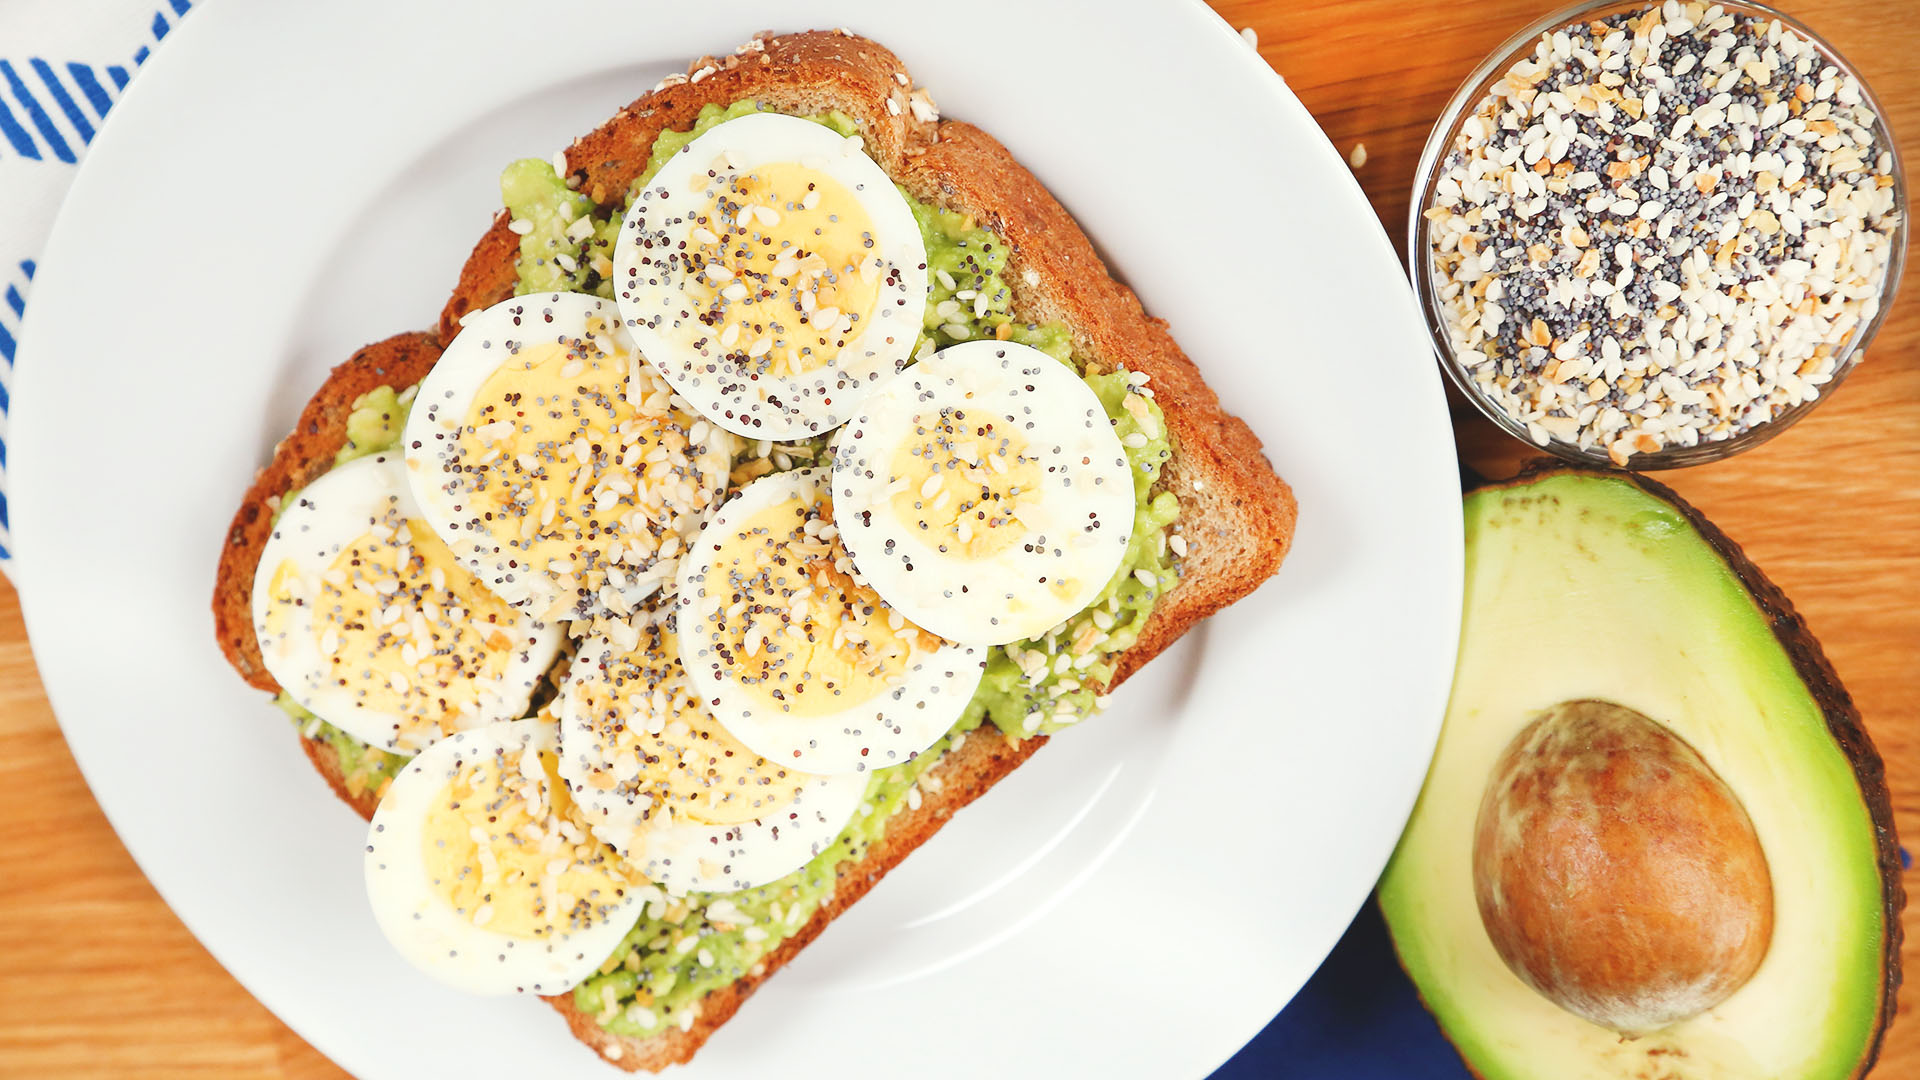 https://cdn-prd.healthymealplans.com/recipe/Everything-Avocado-Egg-Toast_16x9_Healthy-Meal-Plans.jpg